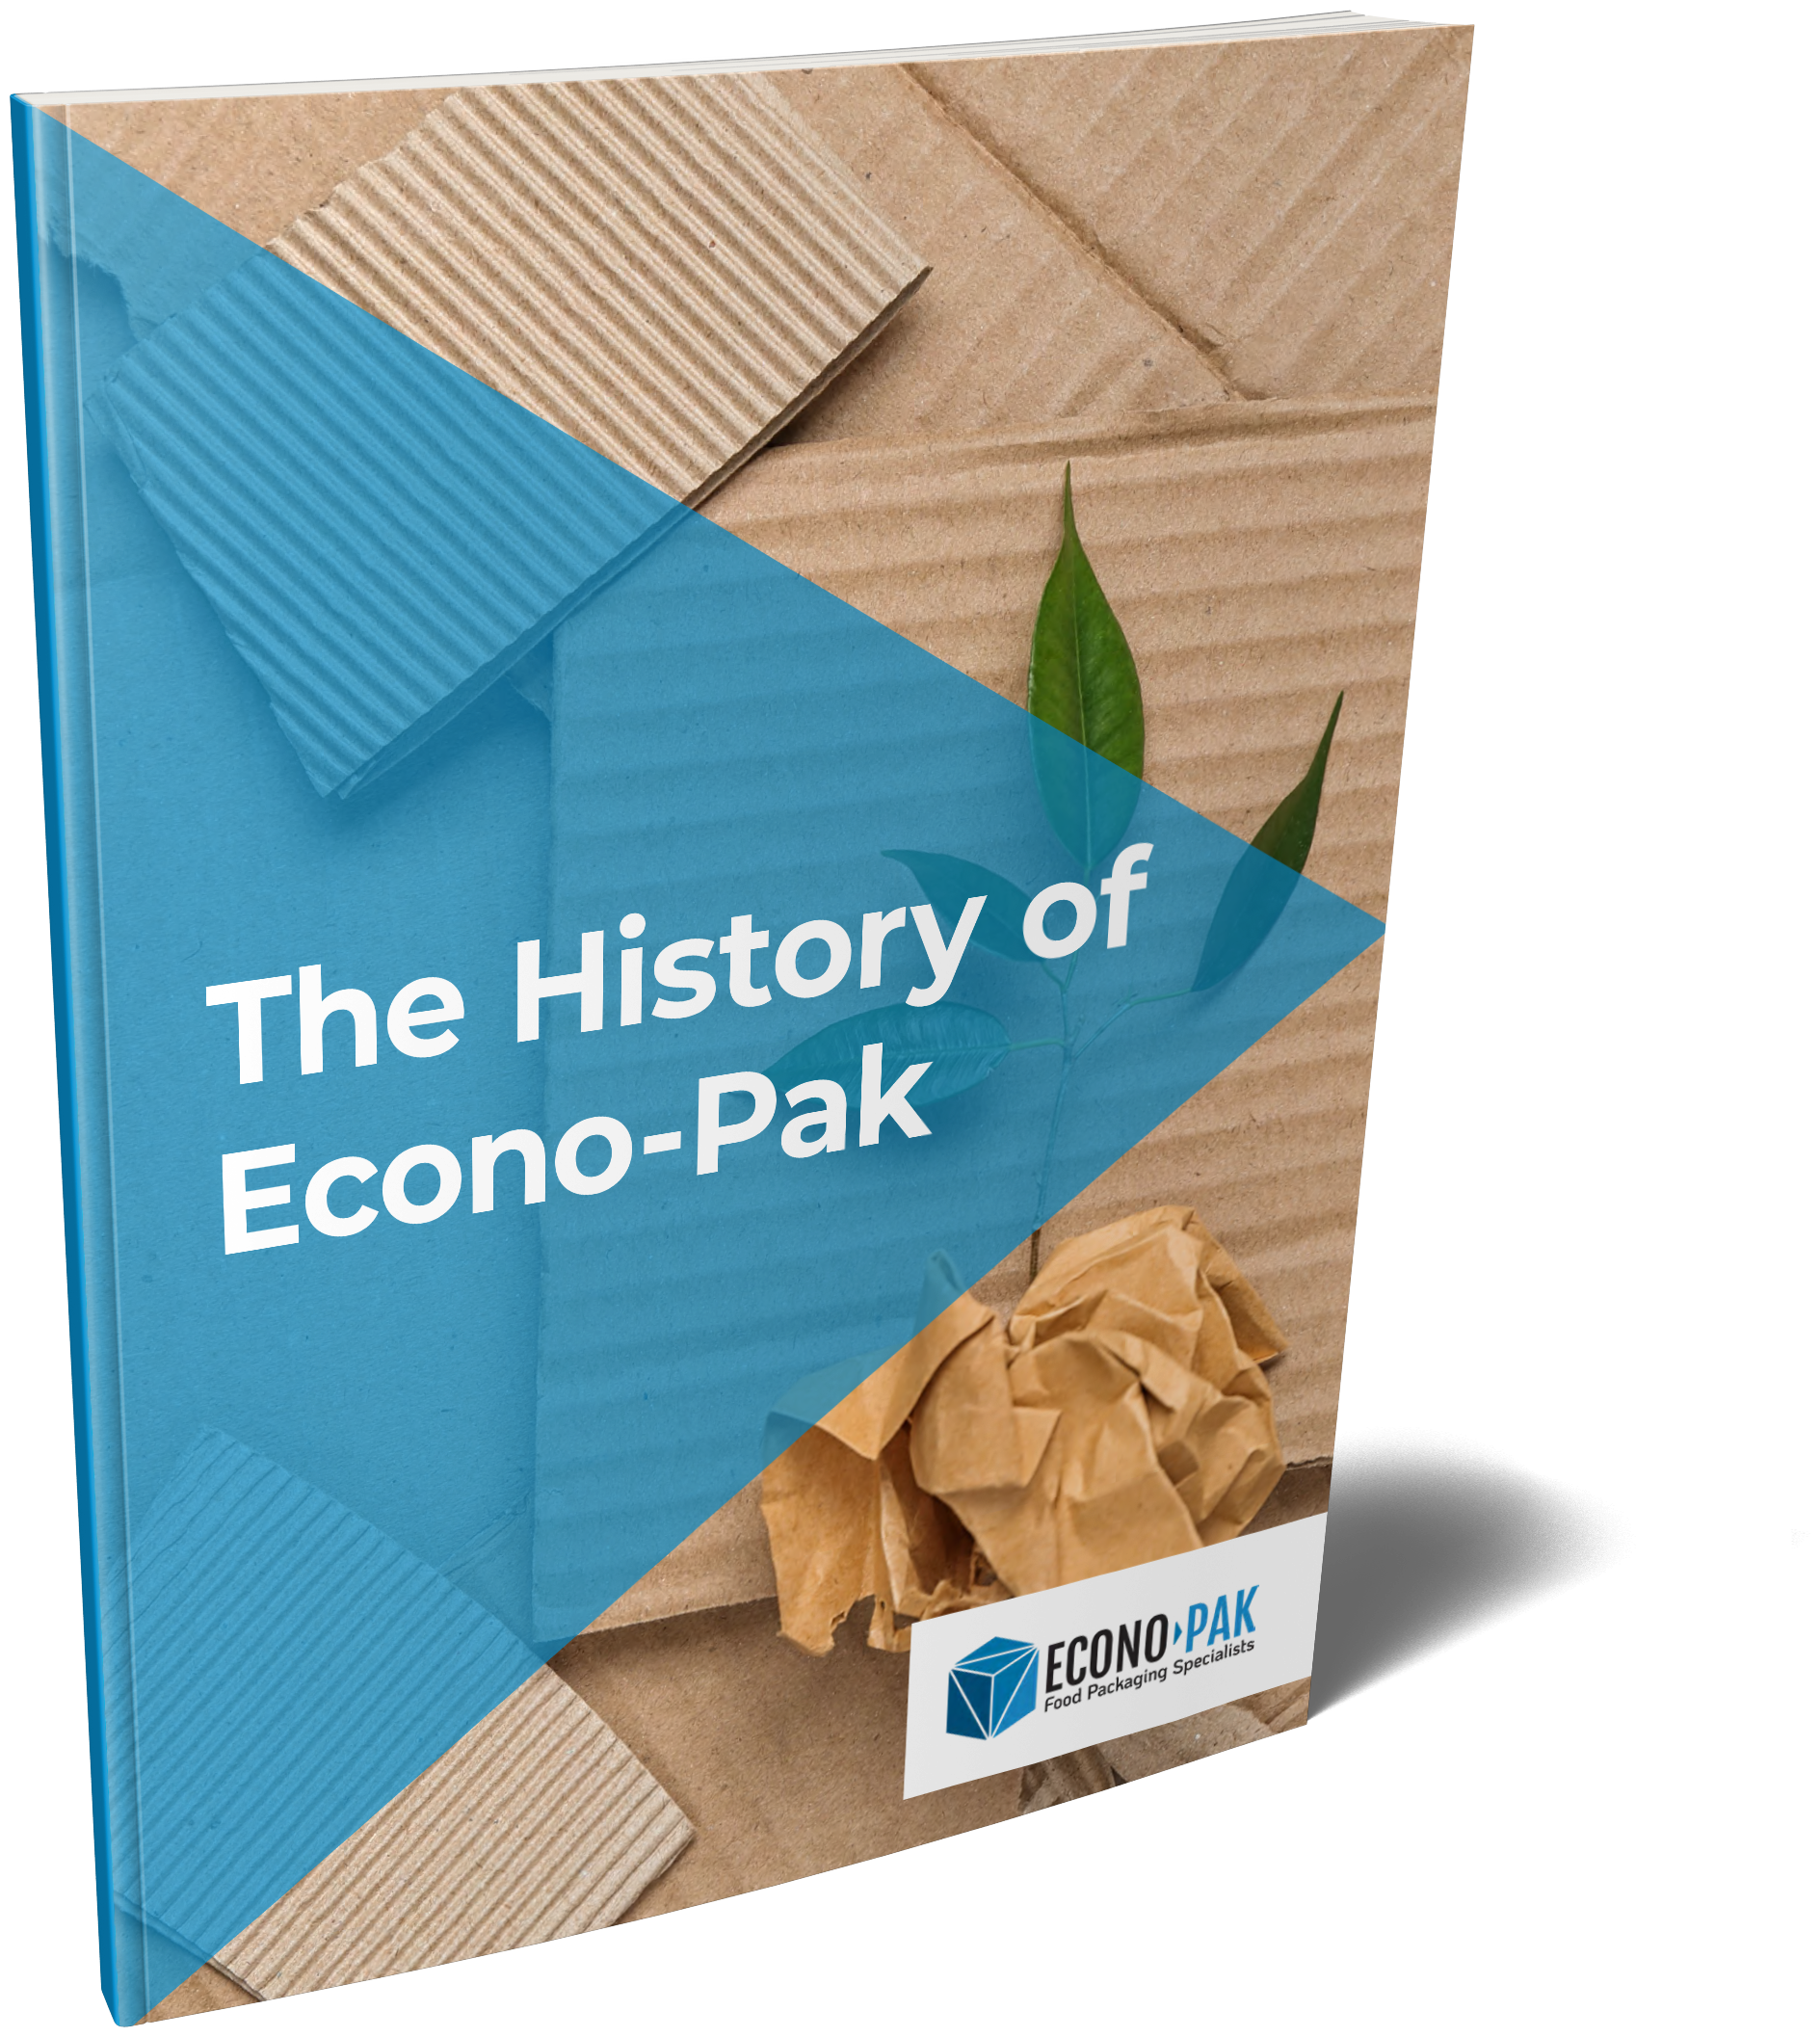 The History of Econo-Pak